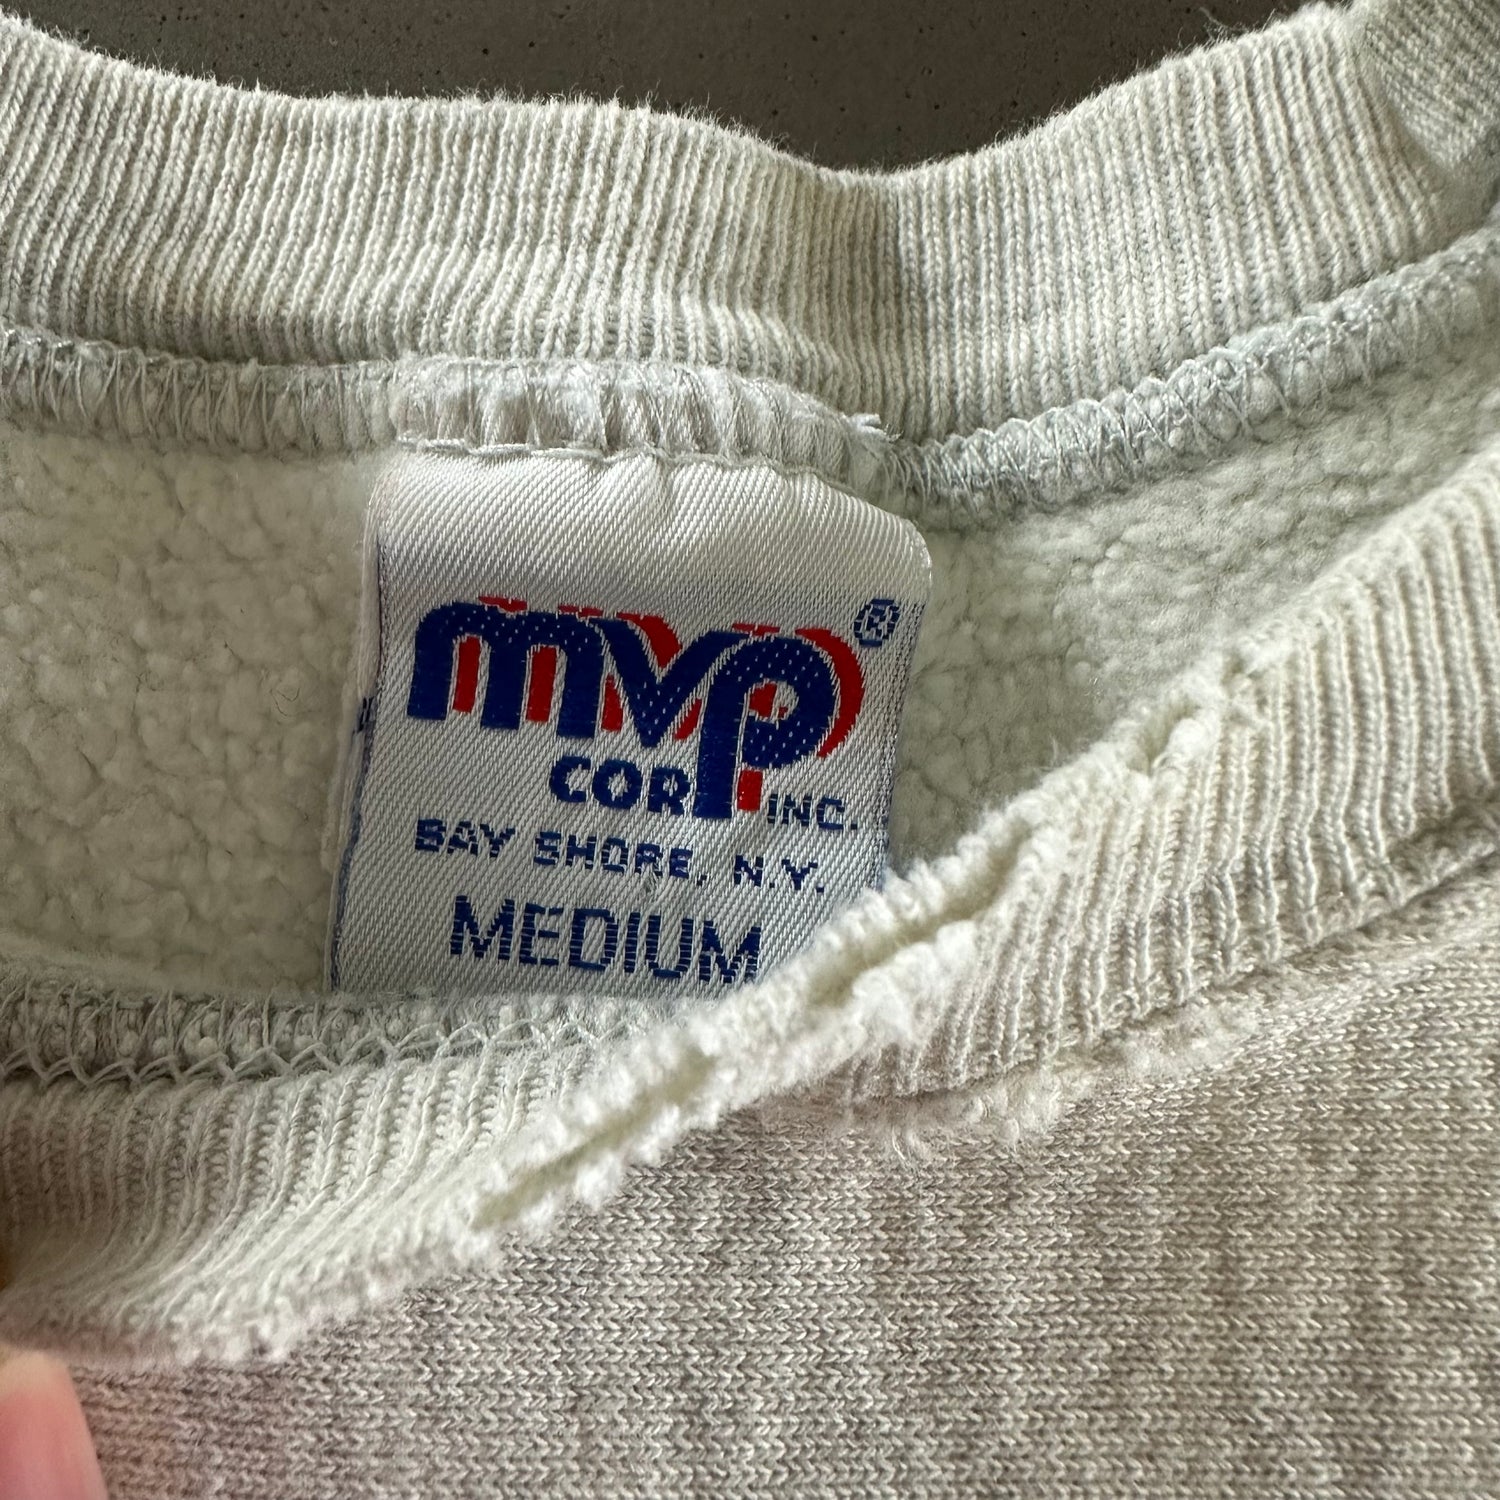 Vintage 1990s Georgetown Sweatshirt size Medium